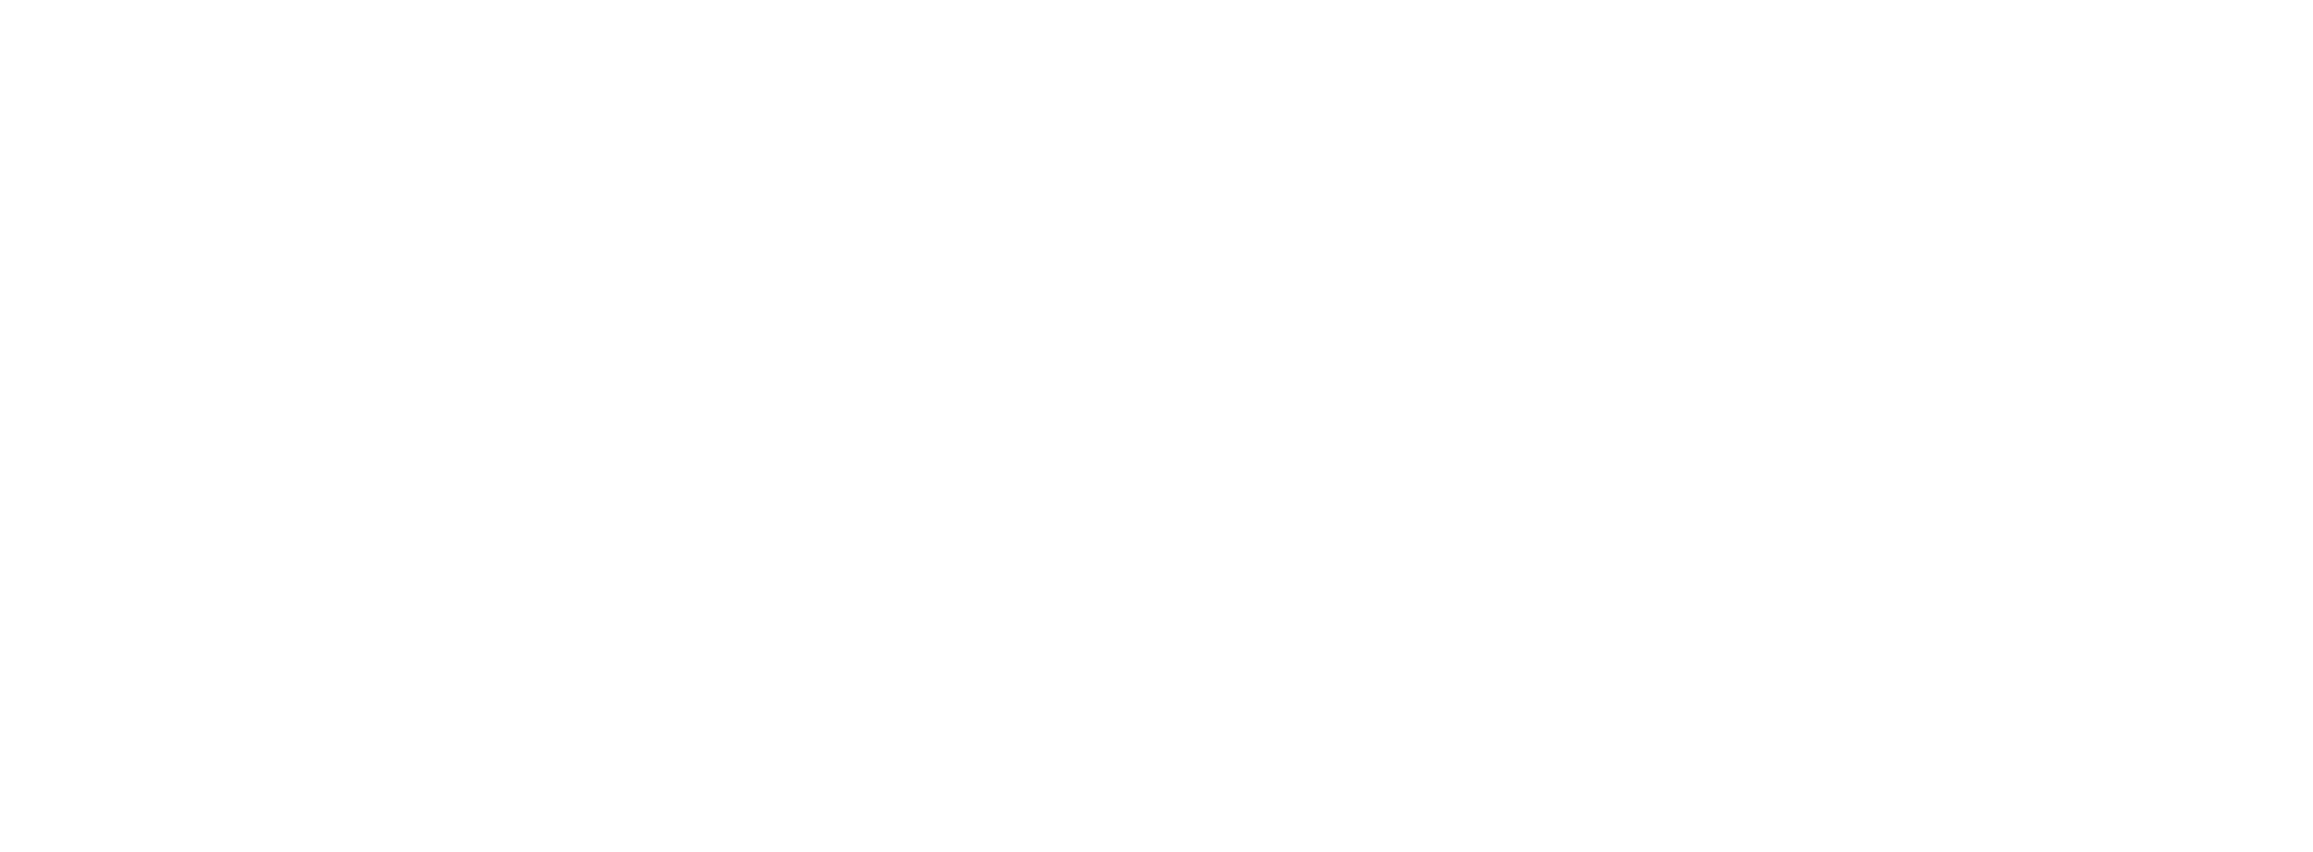 Molecular Loop timeline